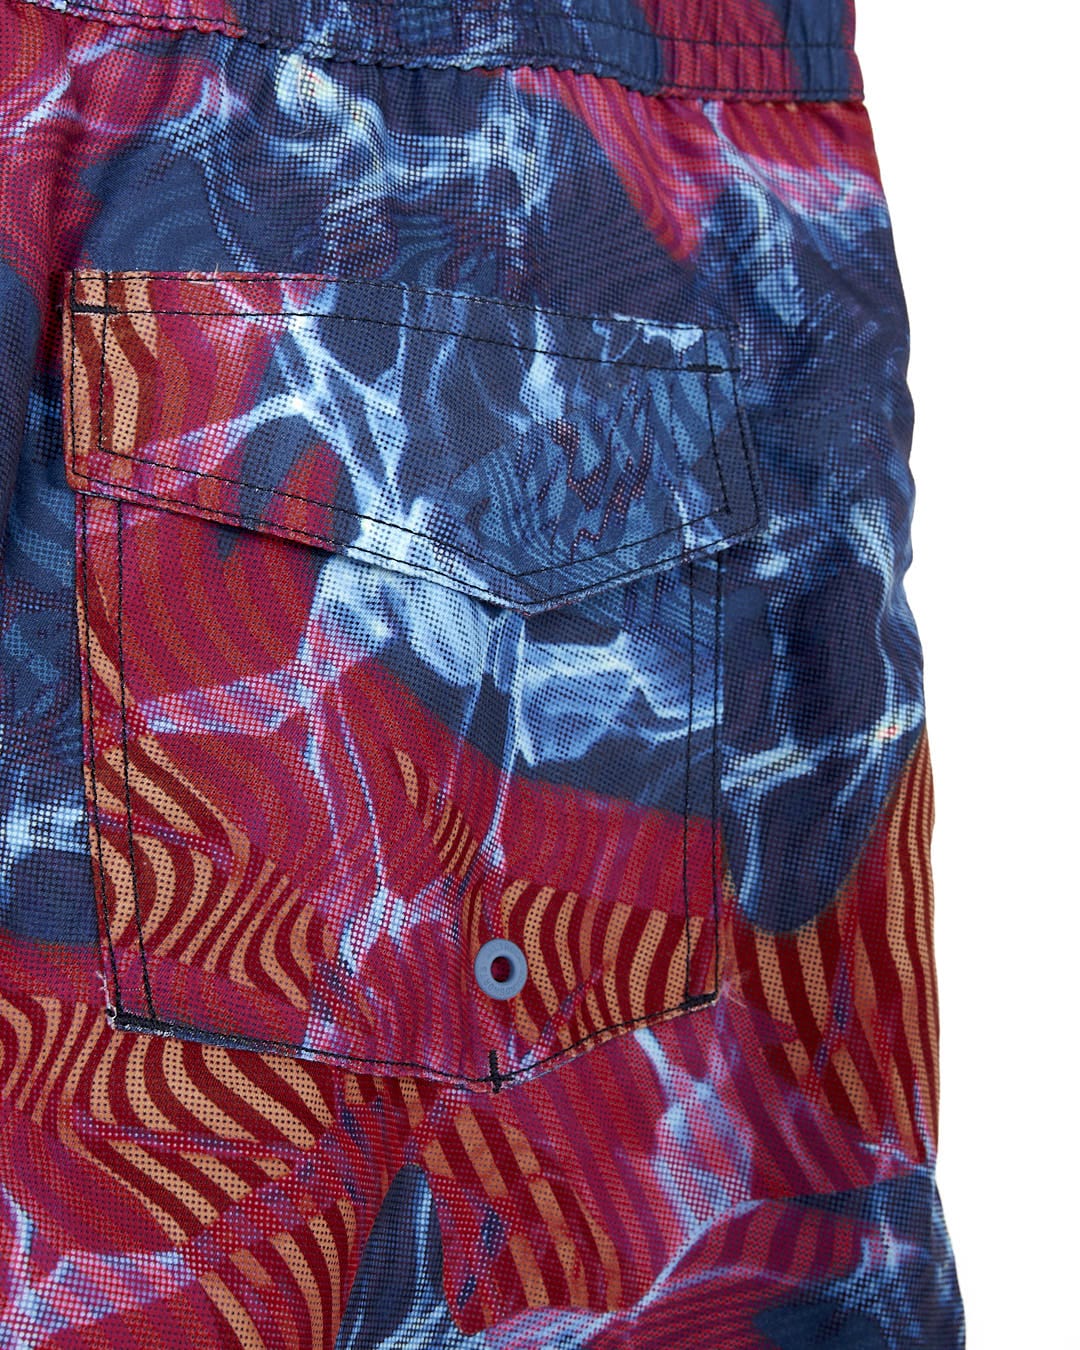 A Saltrock men's swim trunk with a tie dye pattern: Poolside - Mens All Over Print Swimshort - Teal.